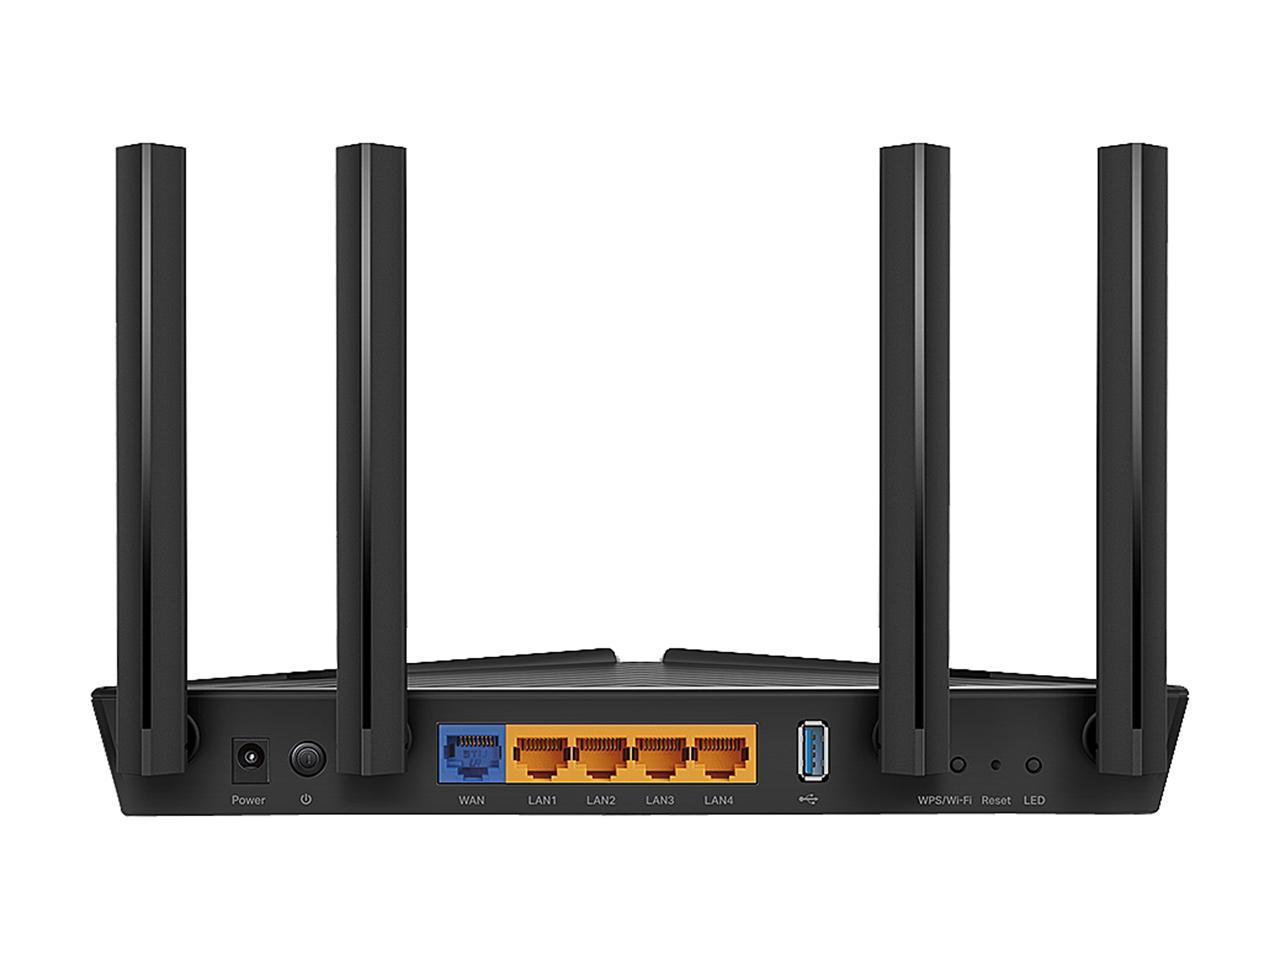 TP-Link WiFi 6 AX3000 Smart WiFi Router (Archer AX50) – 802.11ax Router, Gigabit Router, Dual Band, OFDMA, MU-MIMO, Parental Con